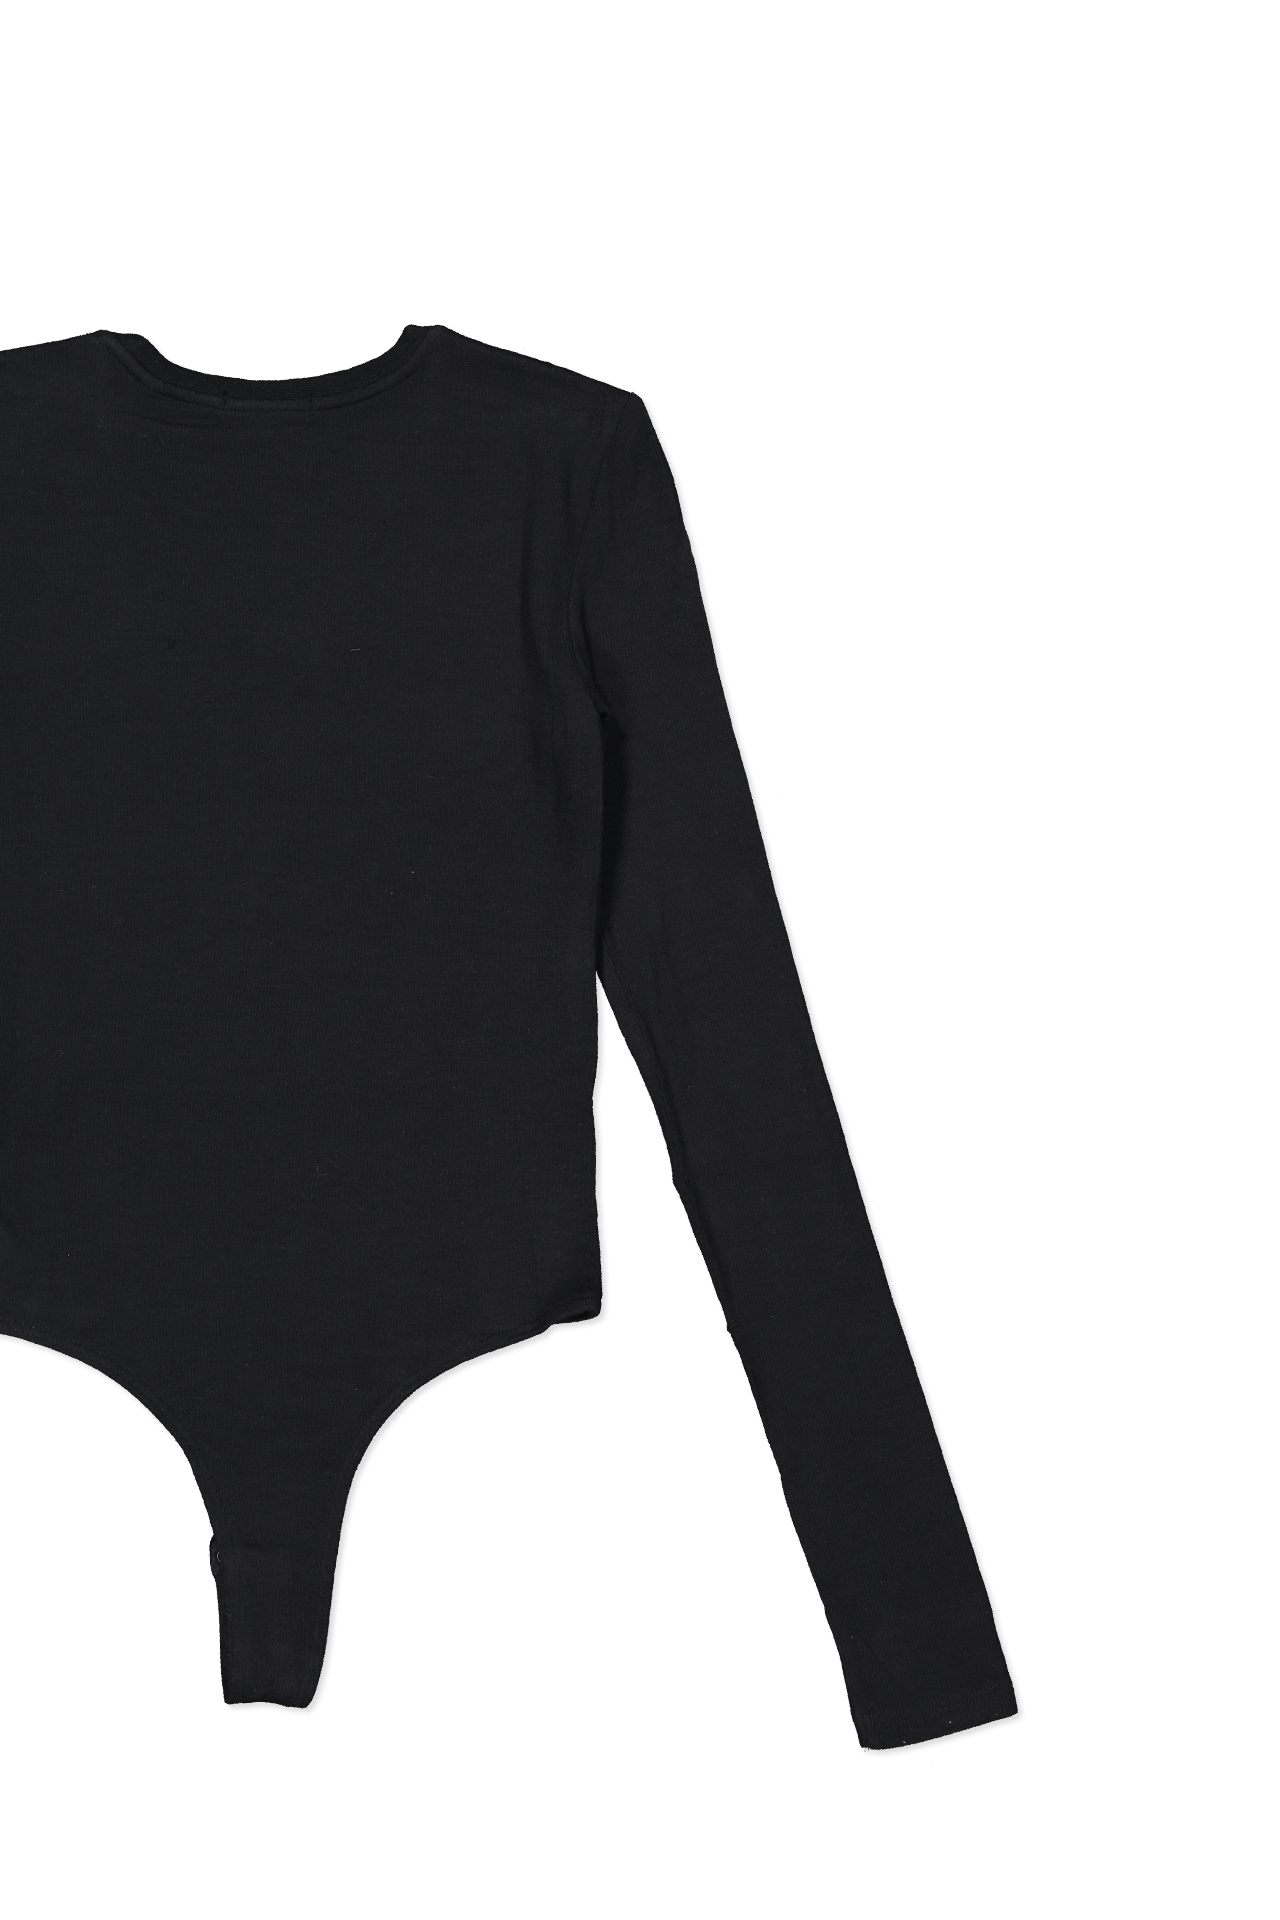 ATM Long Sleeve Bodysuit Black Back Flat Image (6706403475571)